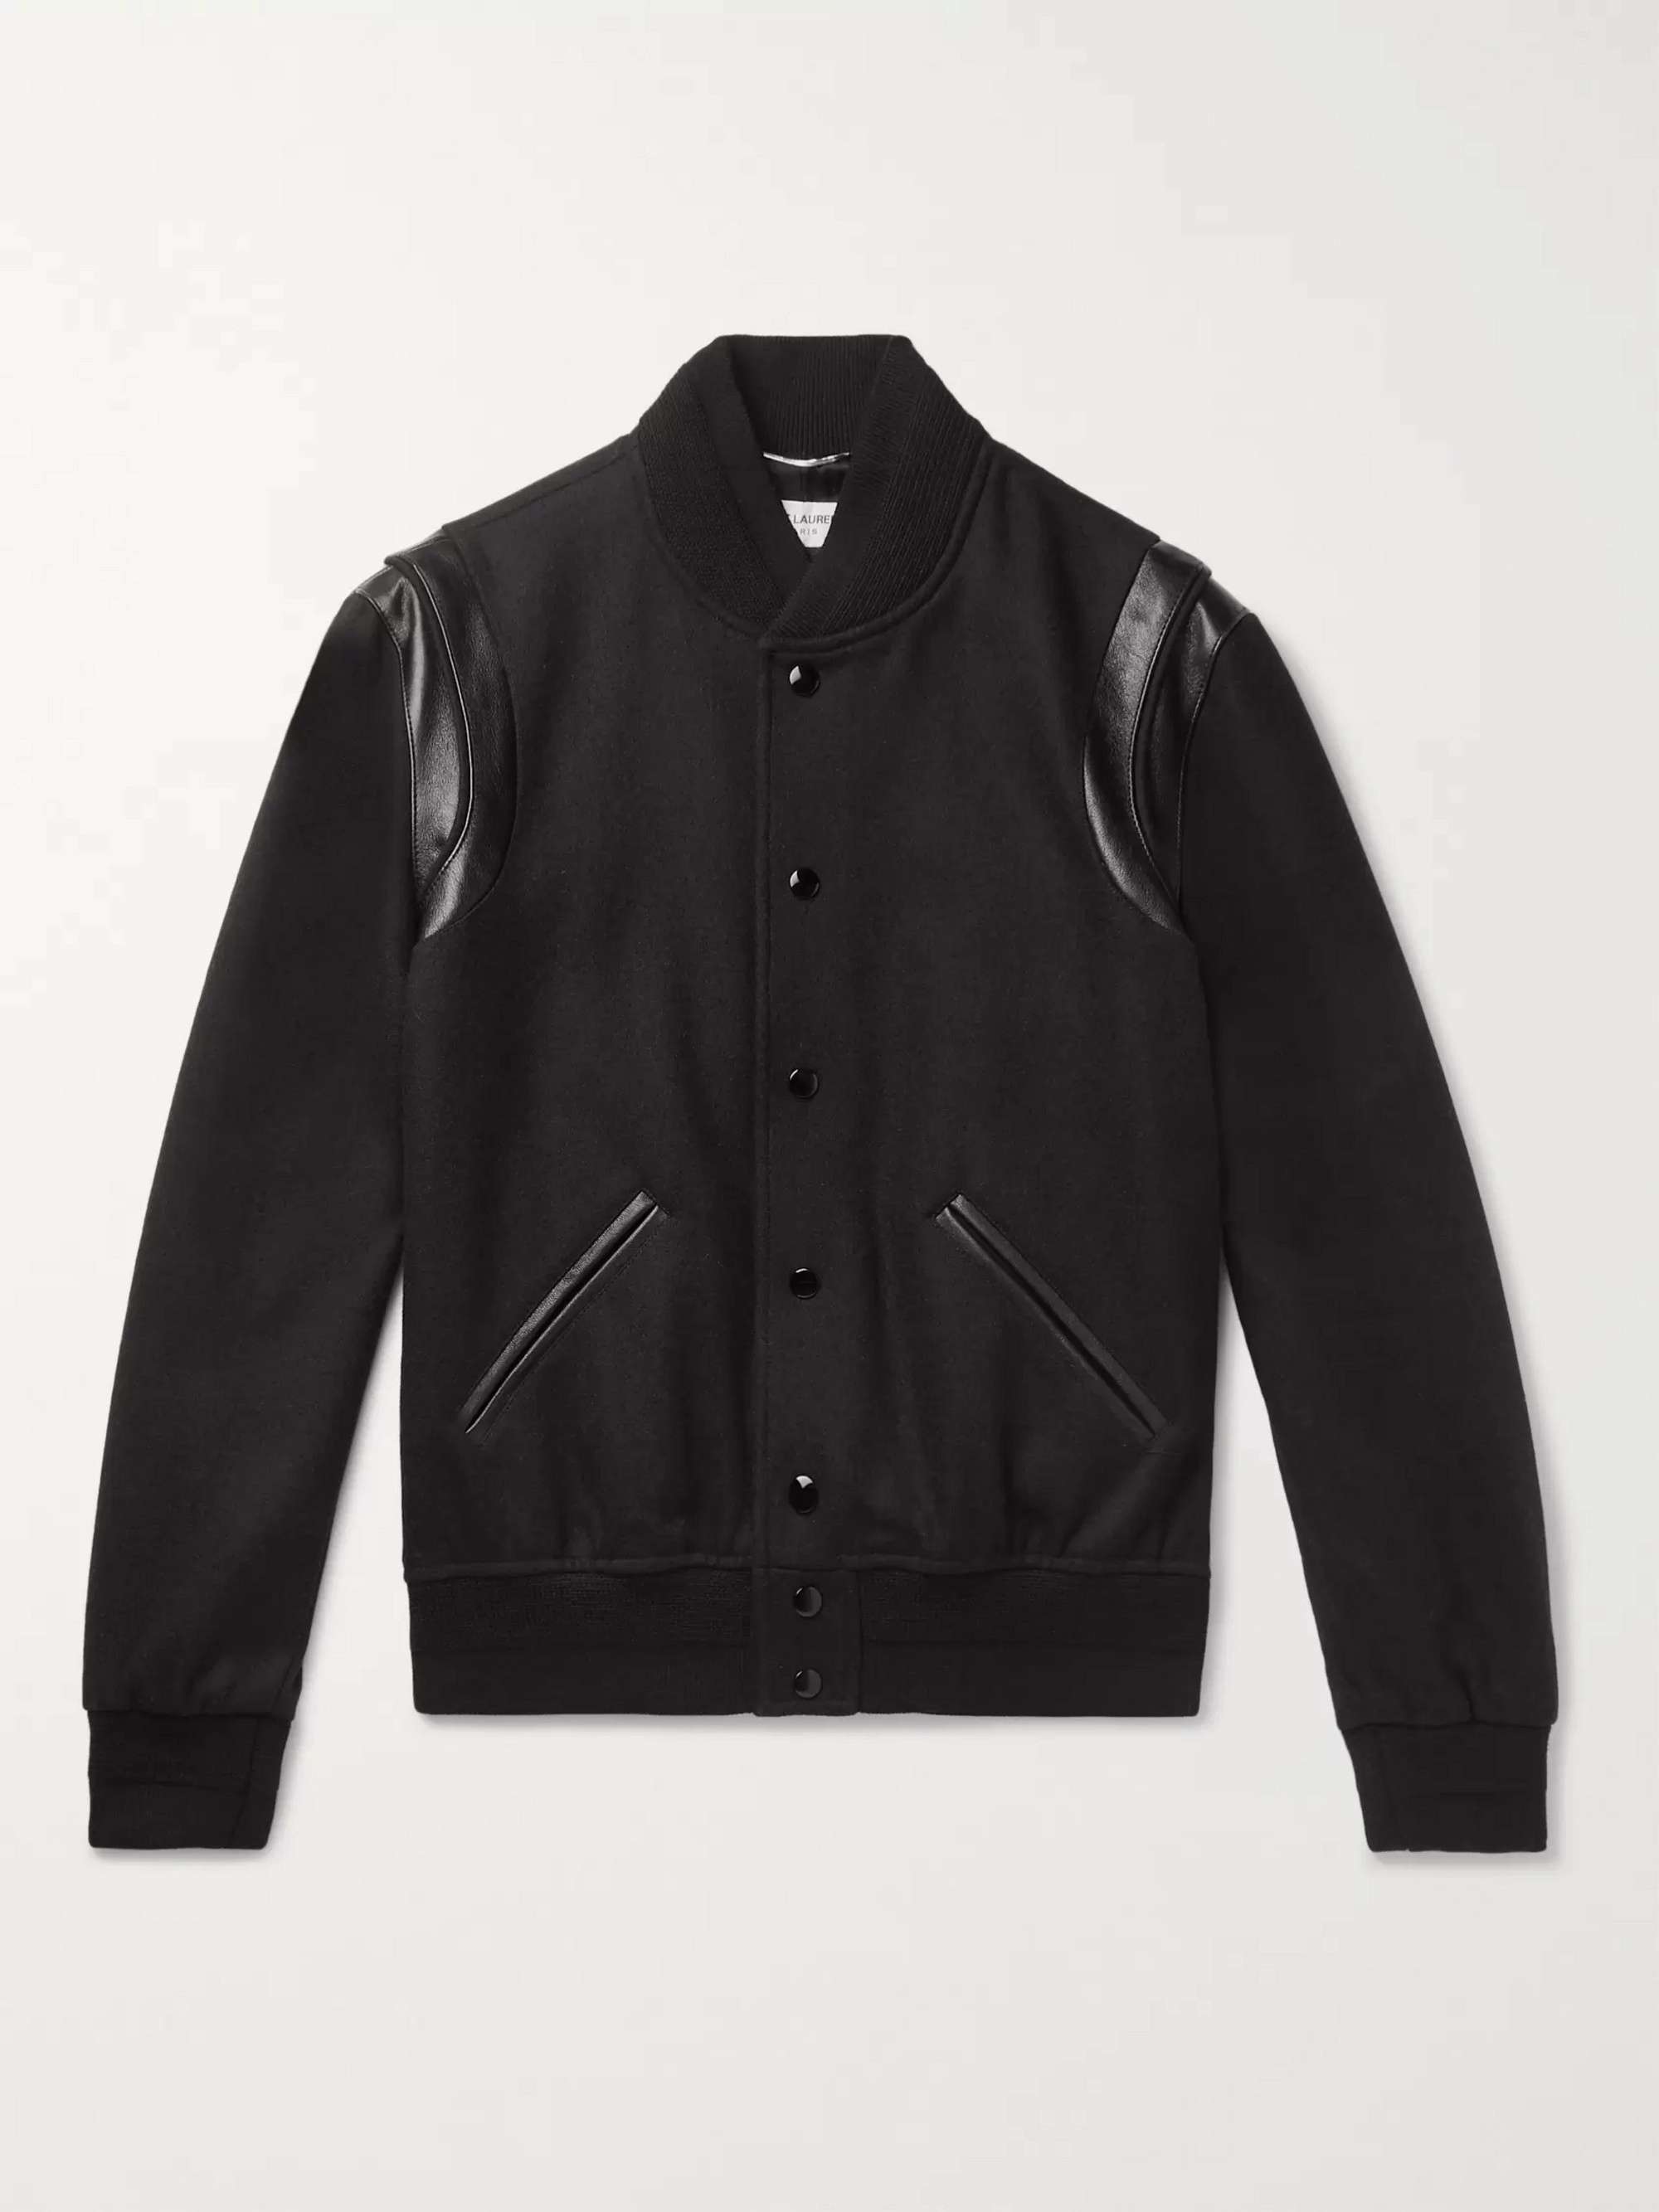 SAINT LAURENT Teddy Leather-Trimmed Wool Bomber Jacket | MR PORTER